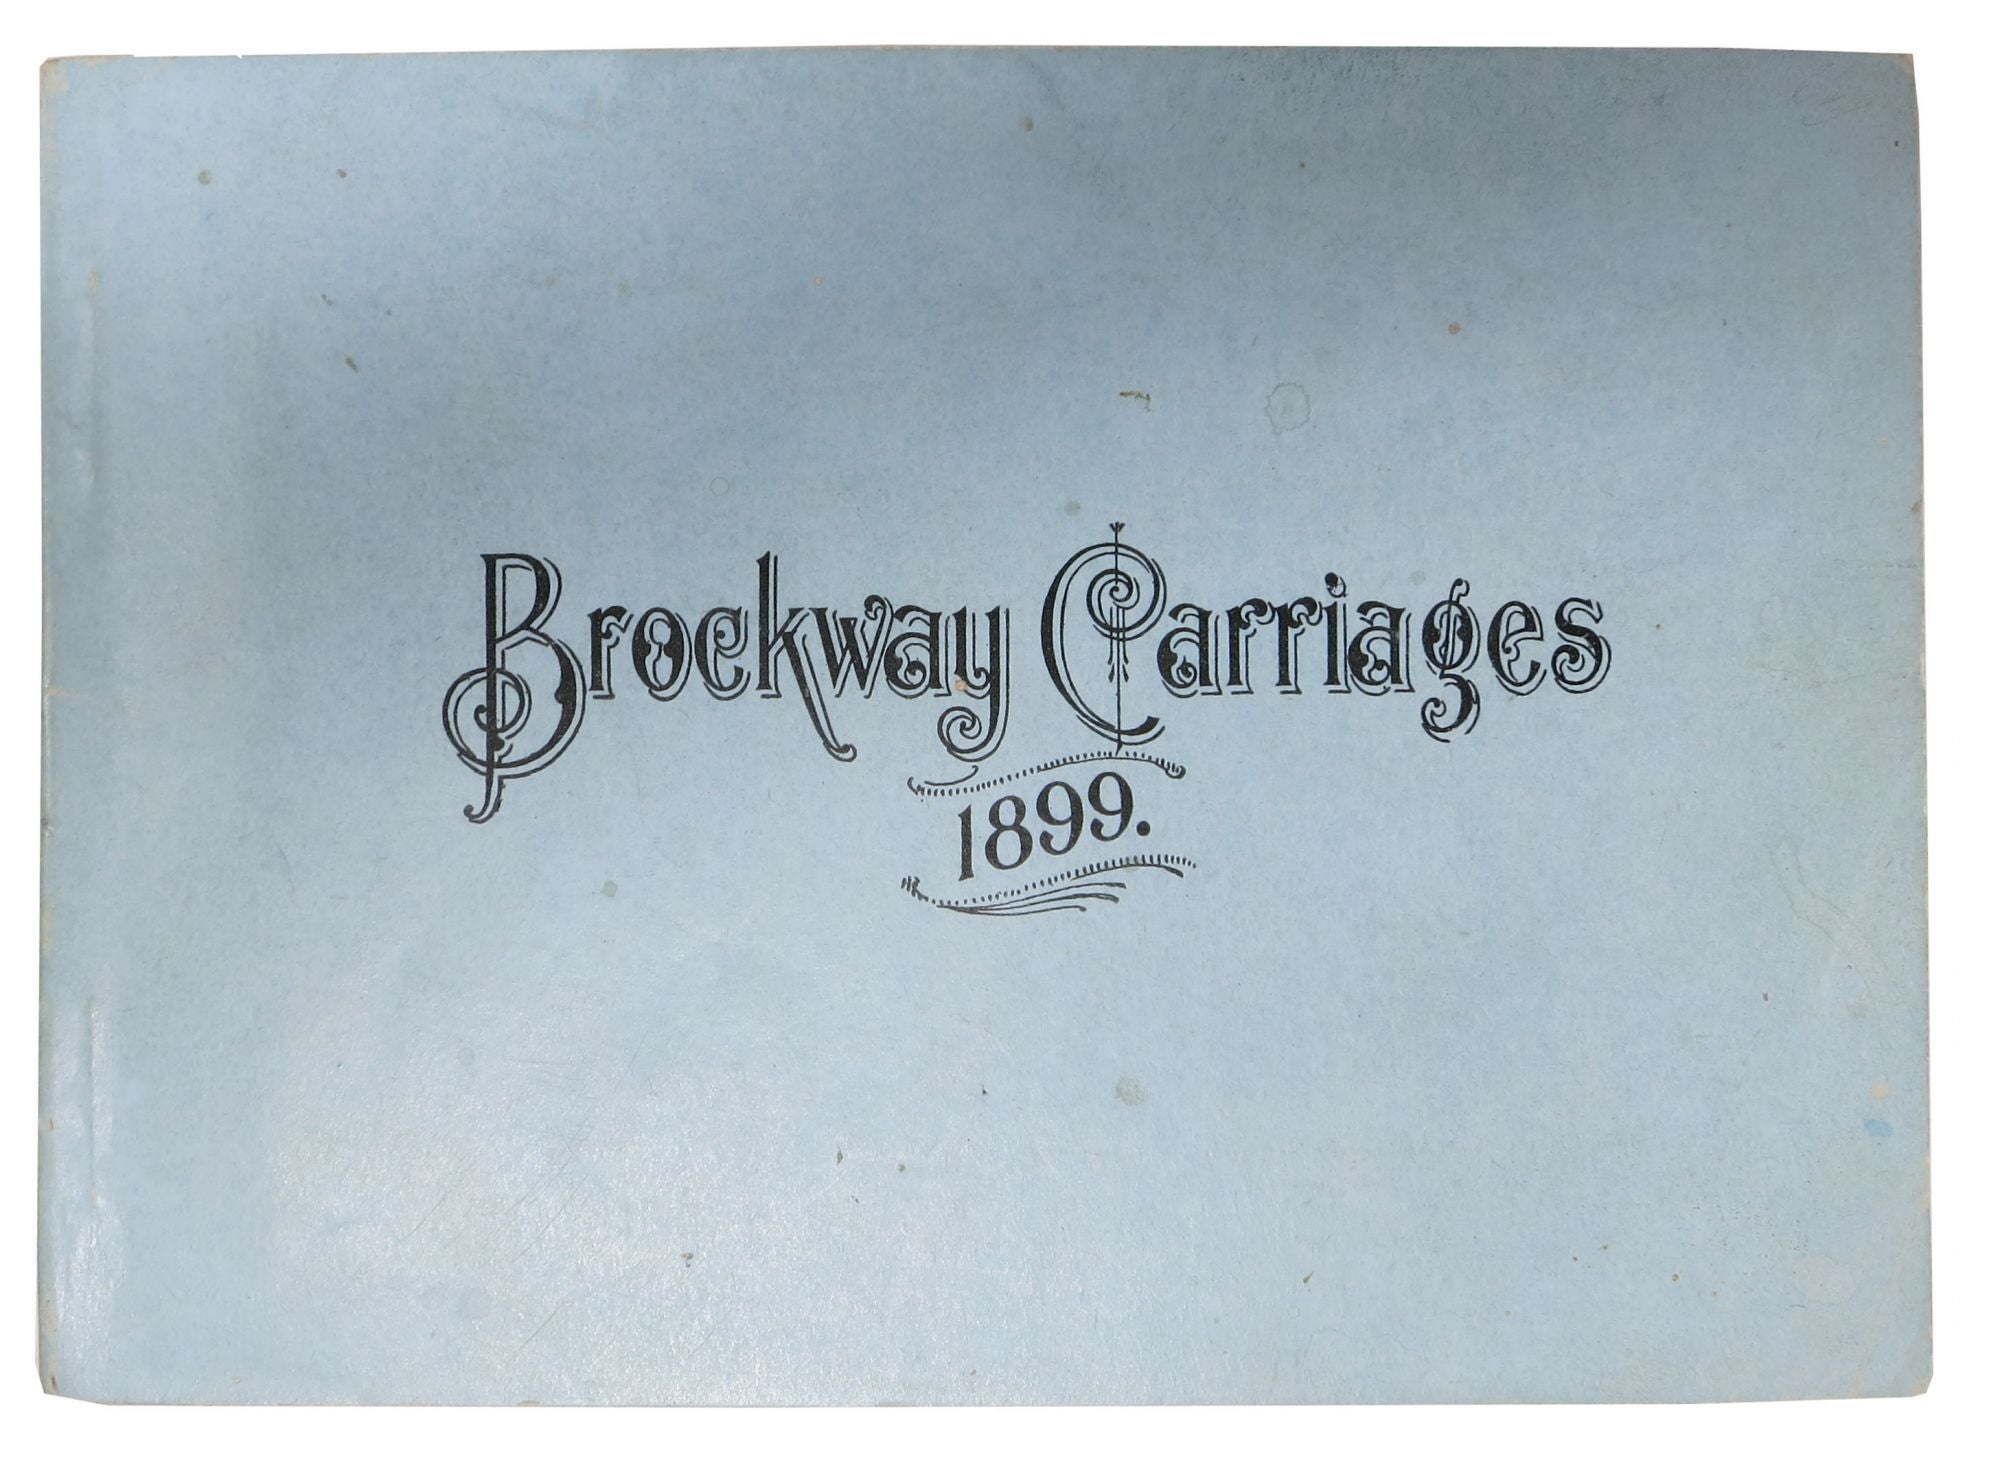 [Trade Catalogue] - WILLIAM N. BROCKWAY. WHOLESALE CARRIAGE BUILDER. 1899